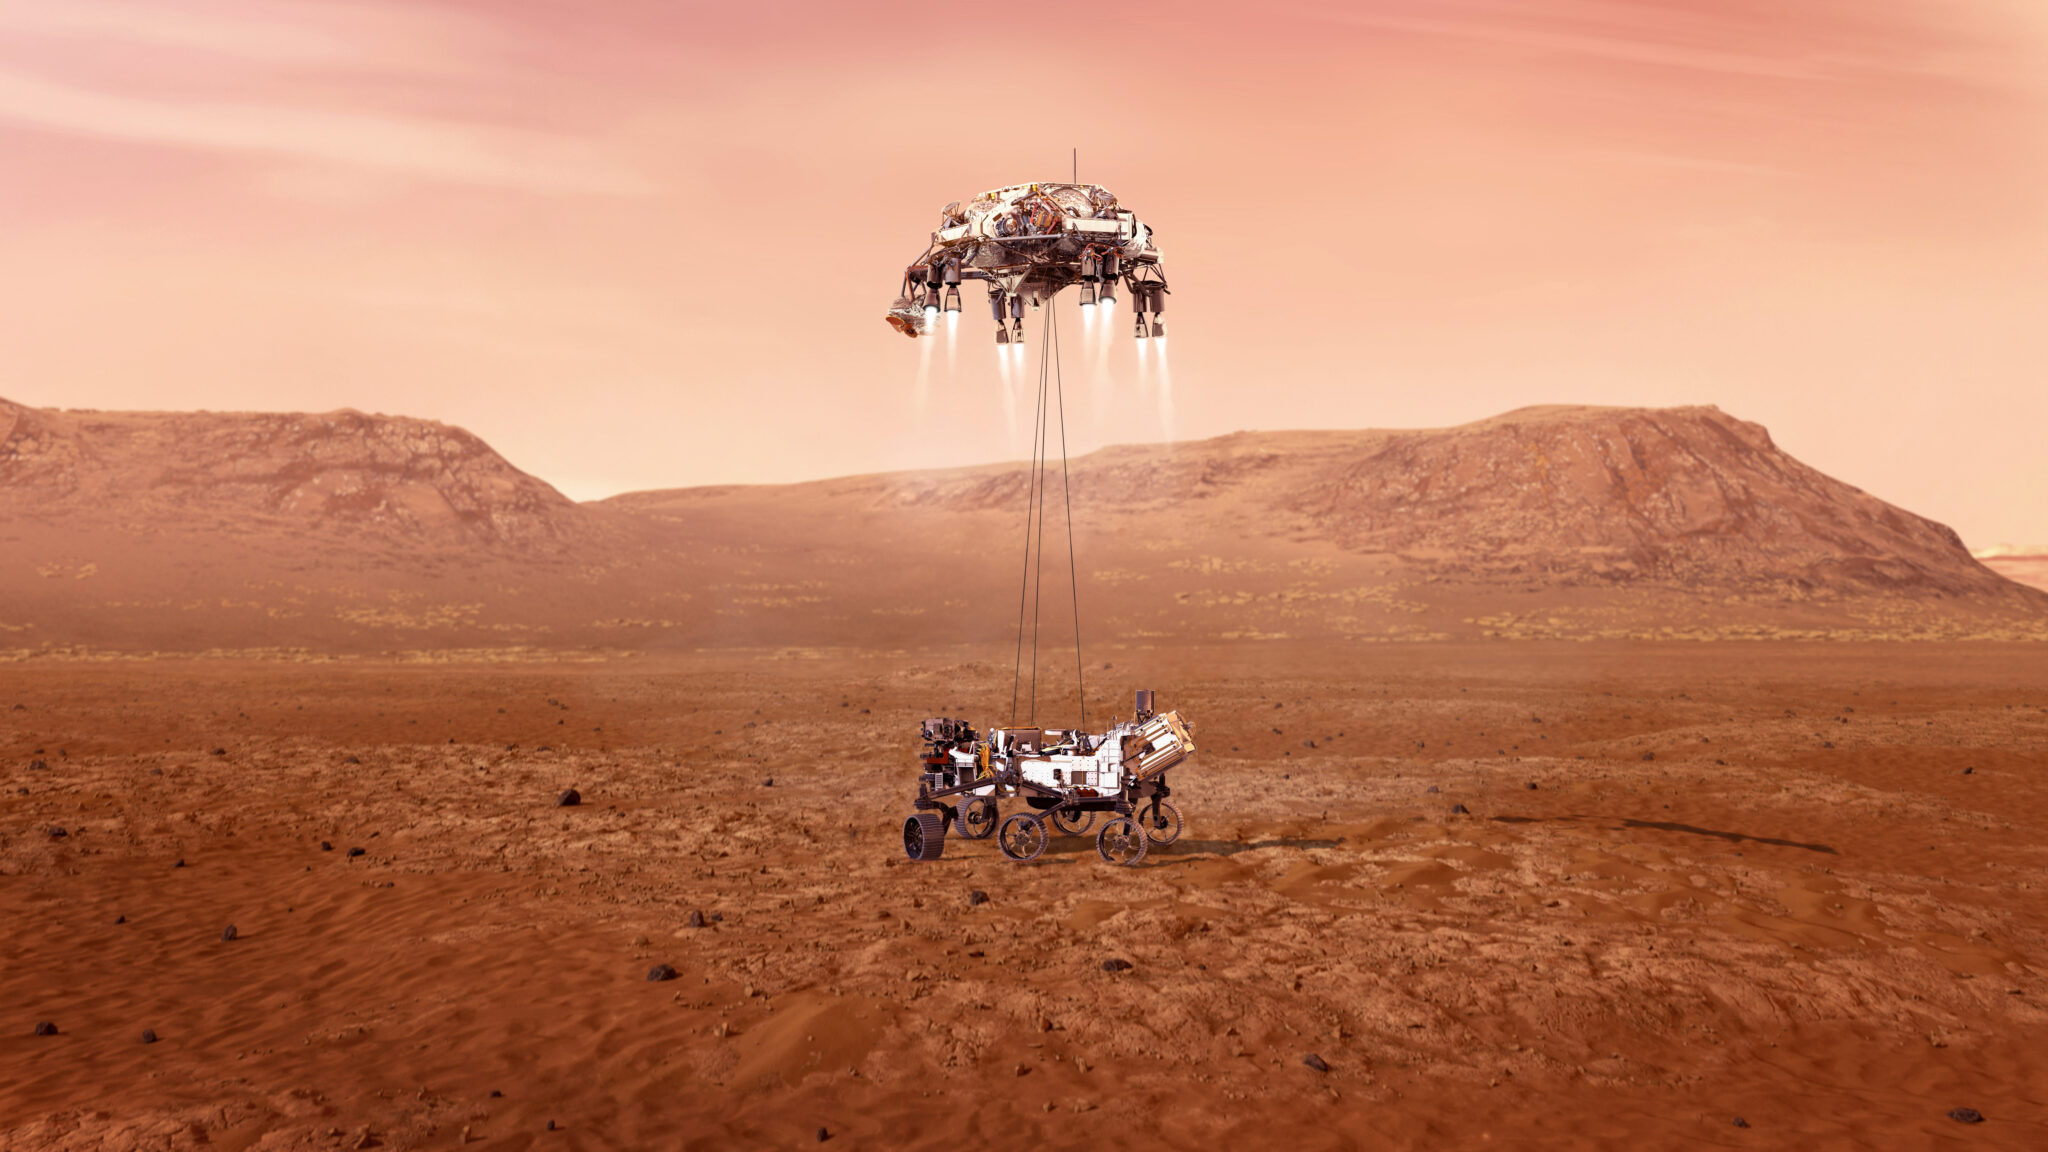 Визуализация посадки ровера «Персеверенса» на Марс. Изображение NASA/JPL-Caltech